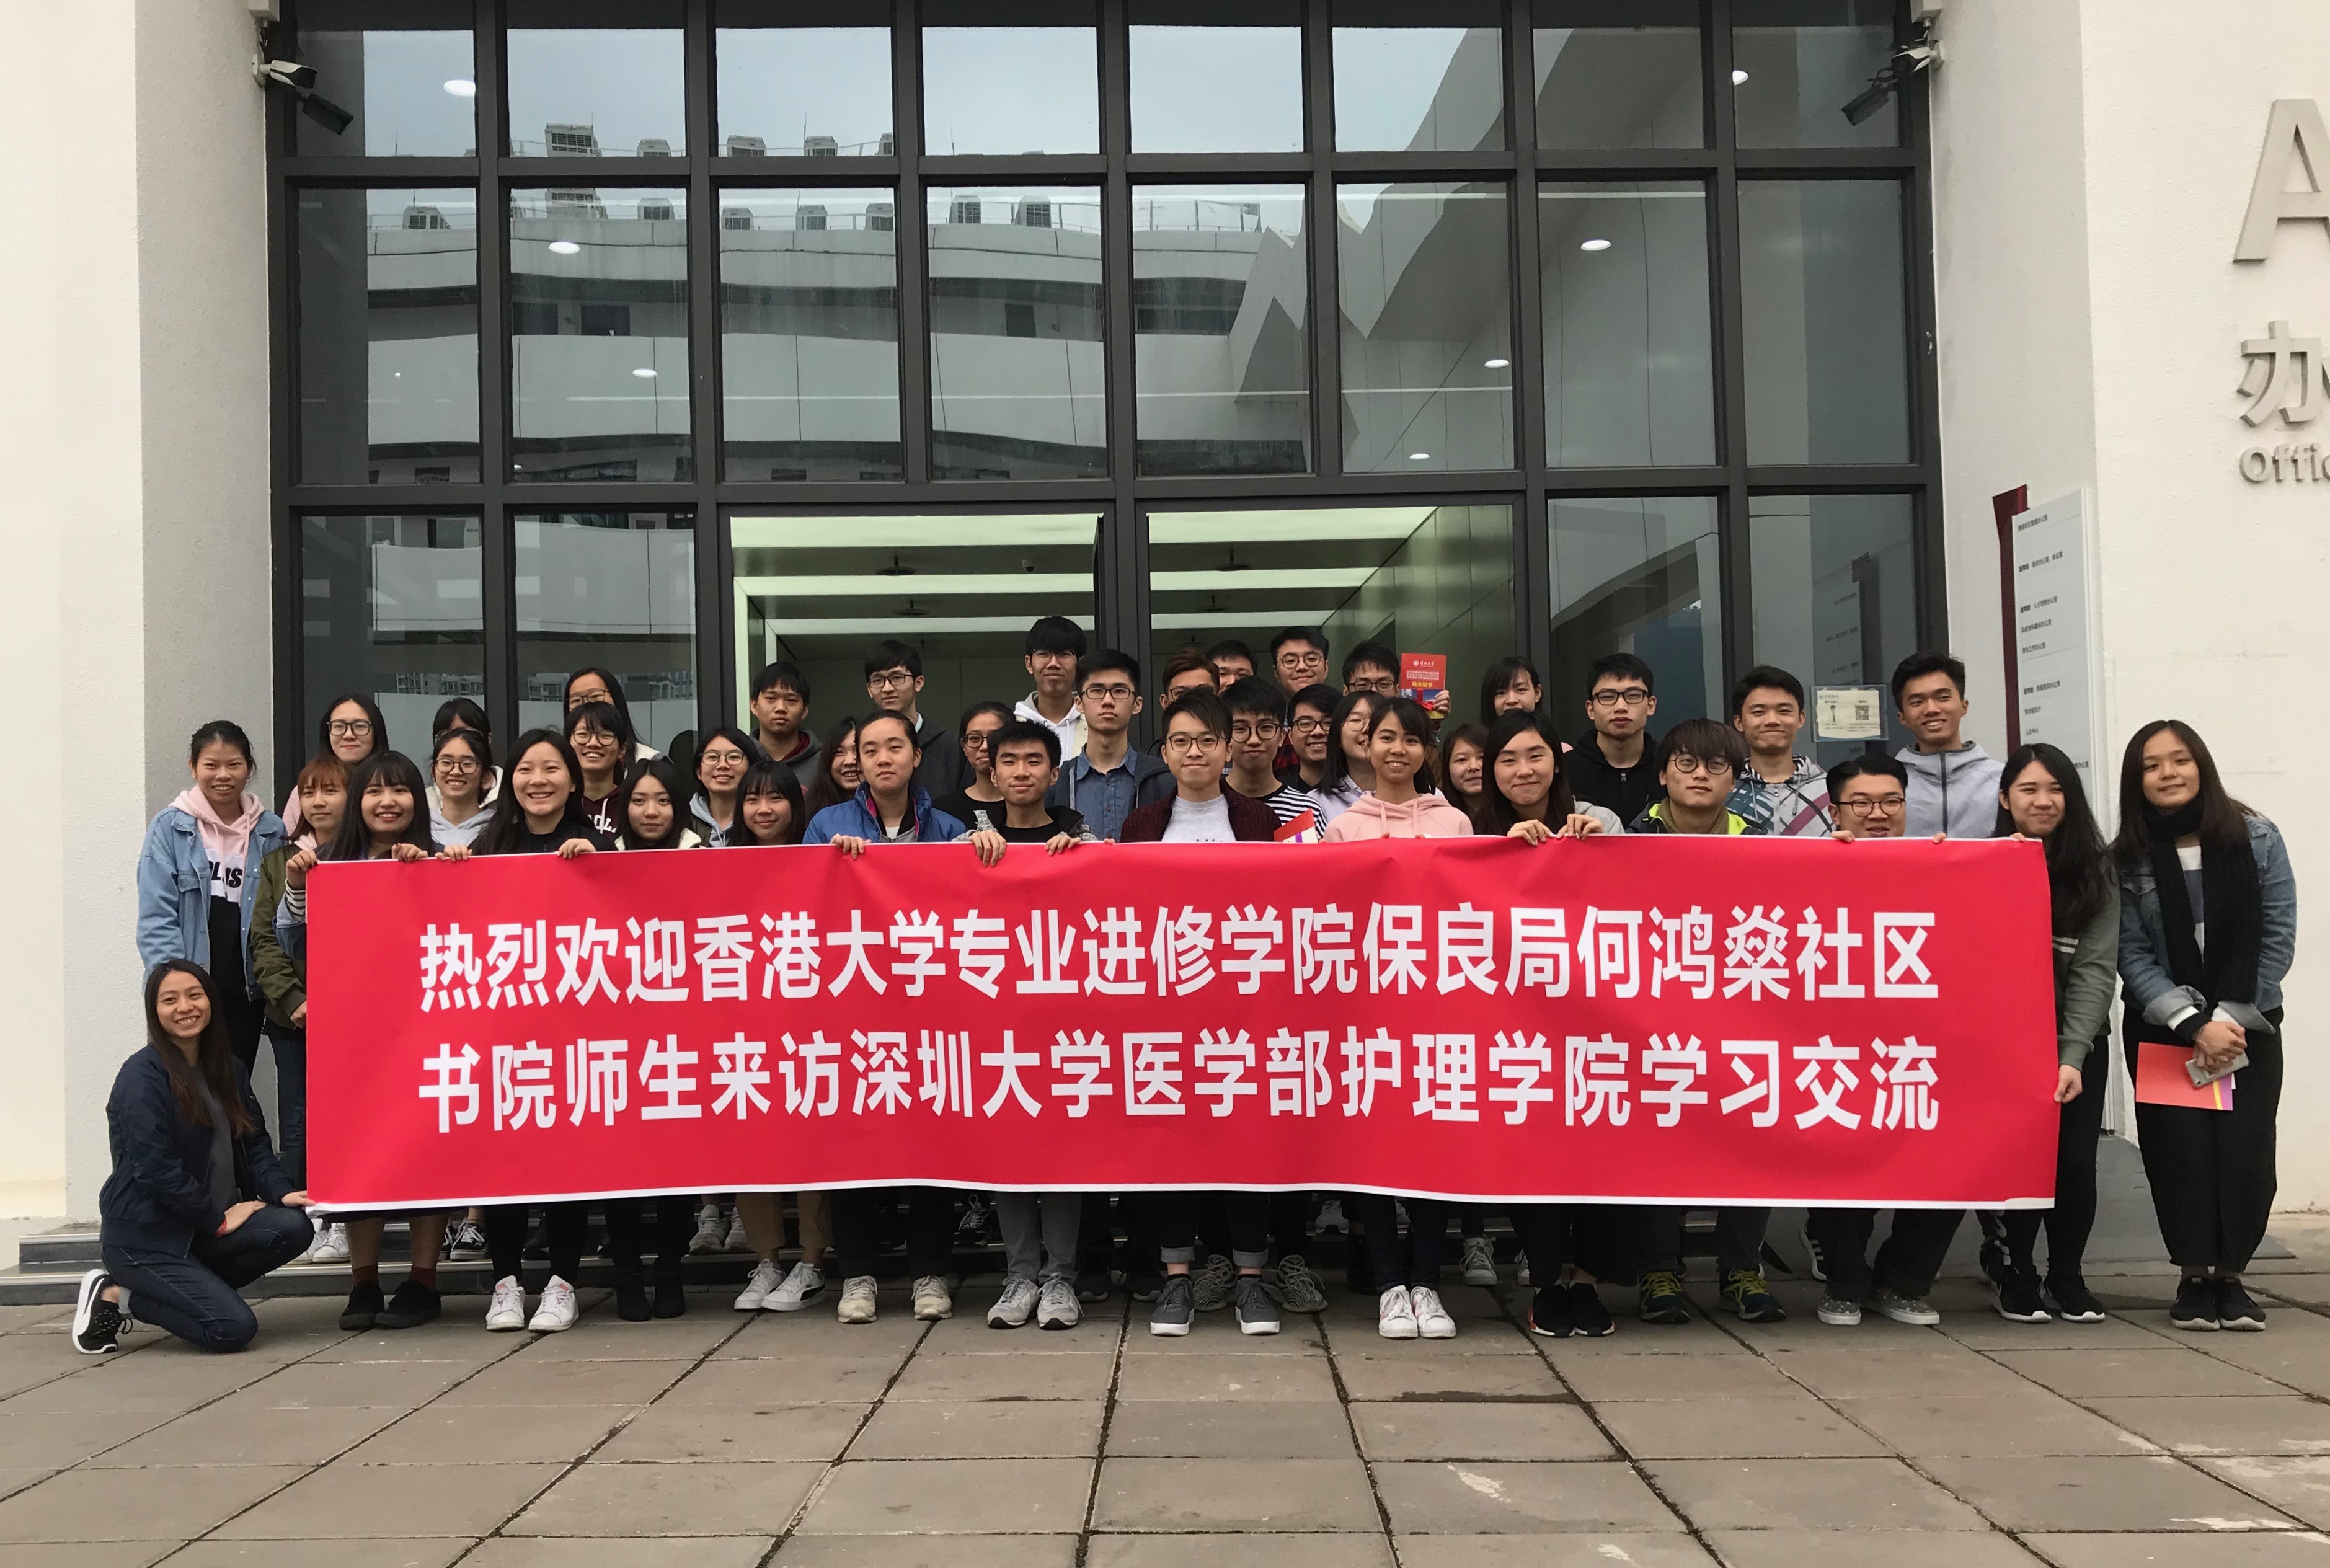 2019 Attachment training programme at the School of Nursing of Shenzhen University - Photo - 17